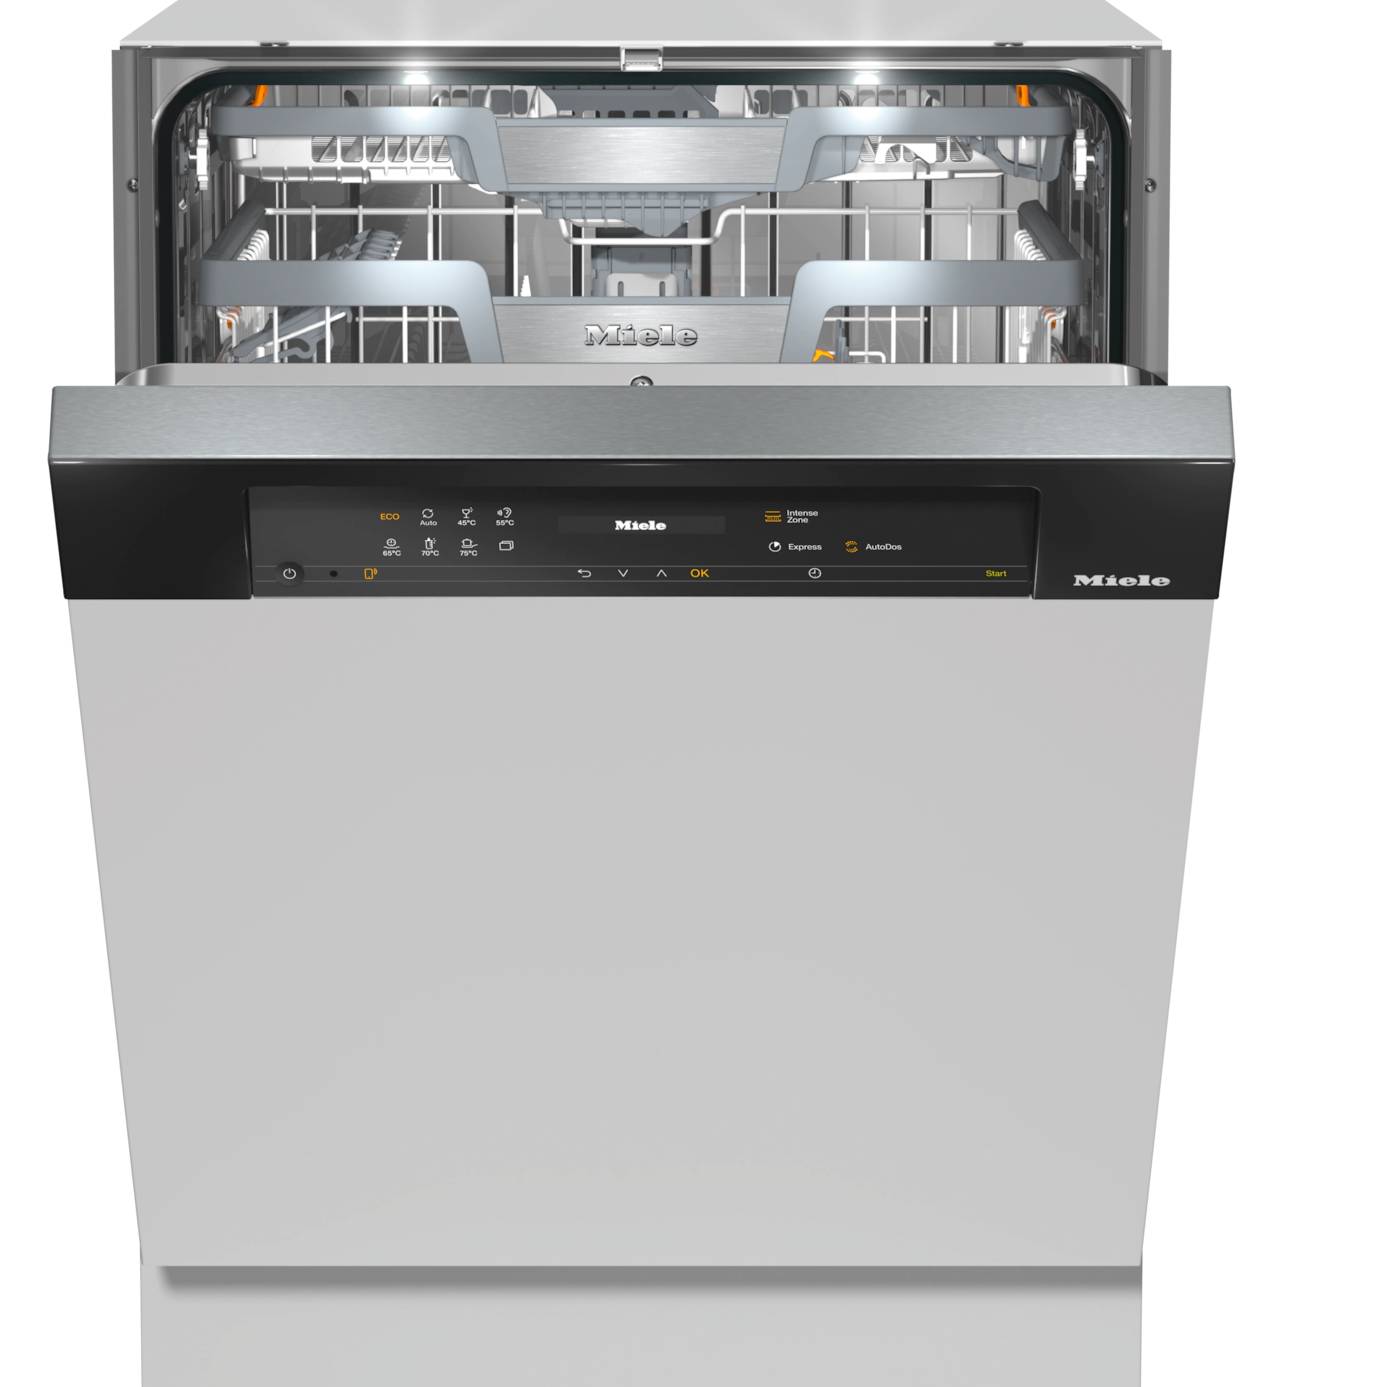 Delimično-ugradna mašina za pranje sudova G 7920 SCi AutoDos - Cool Shop